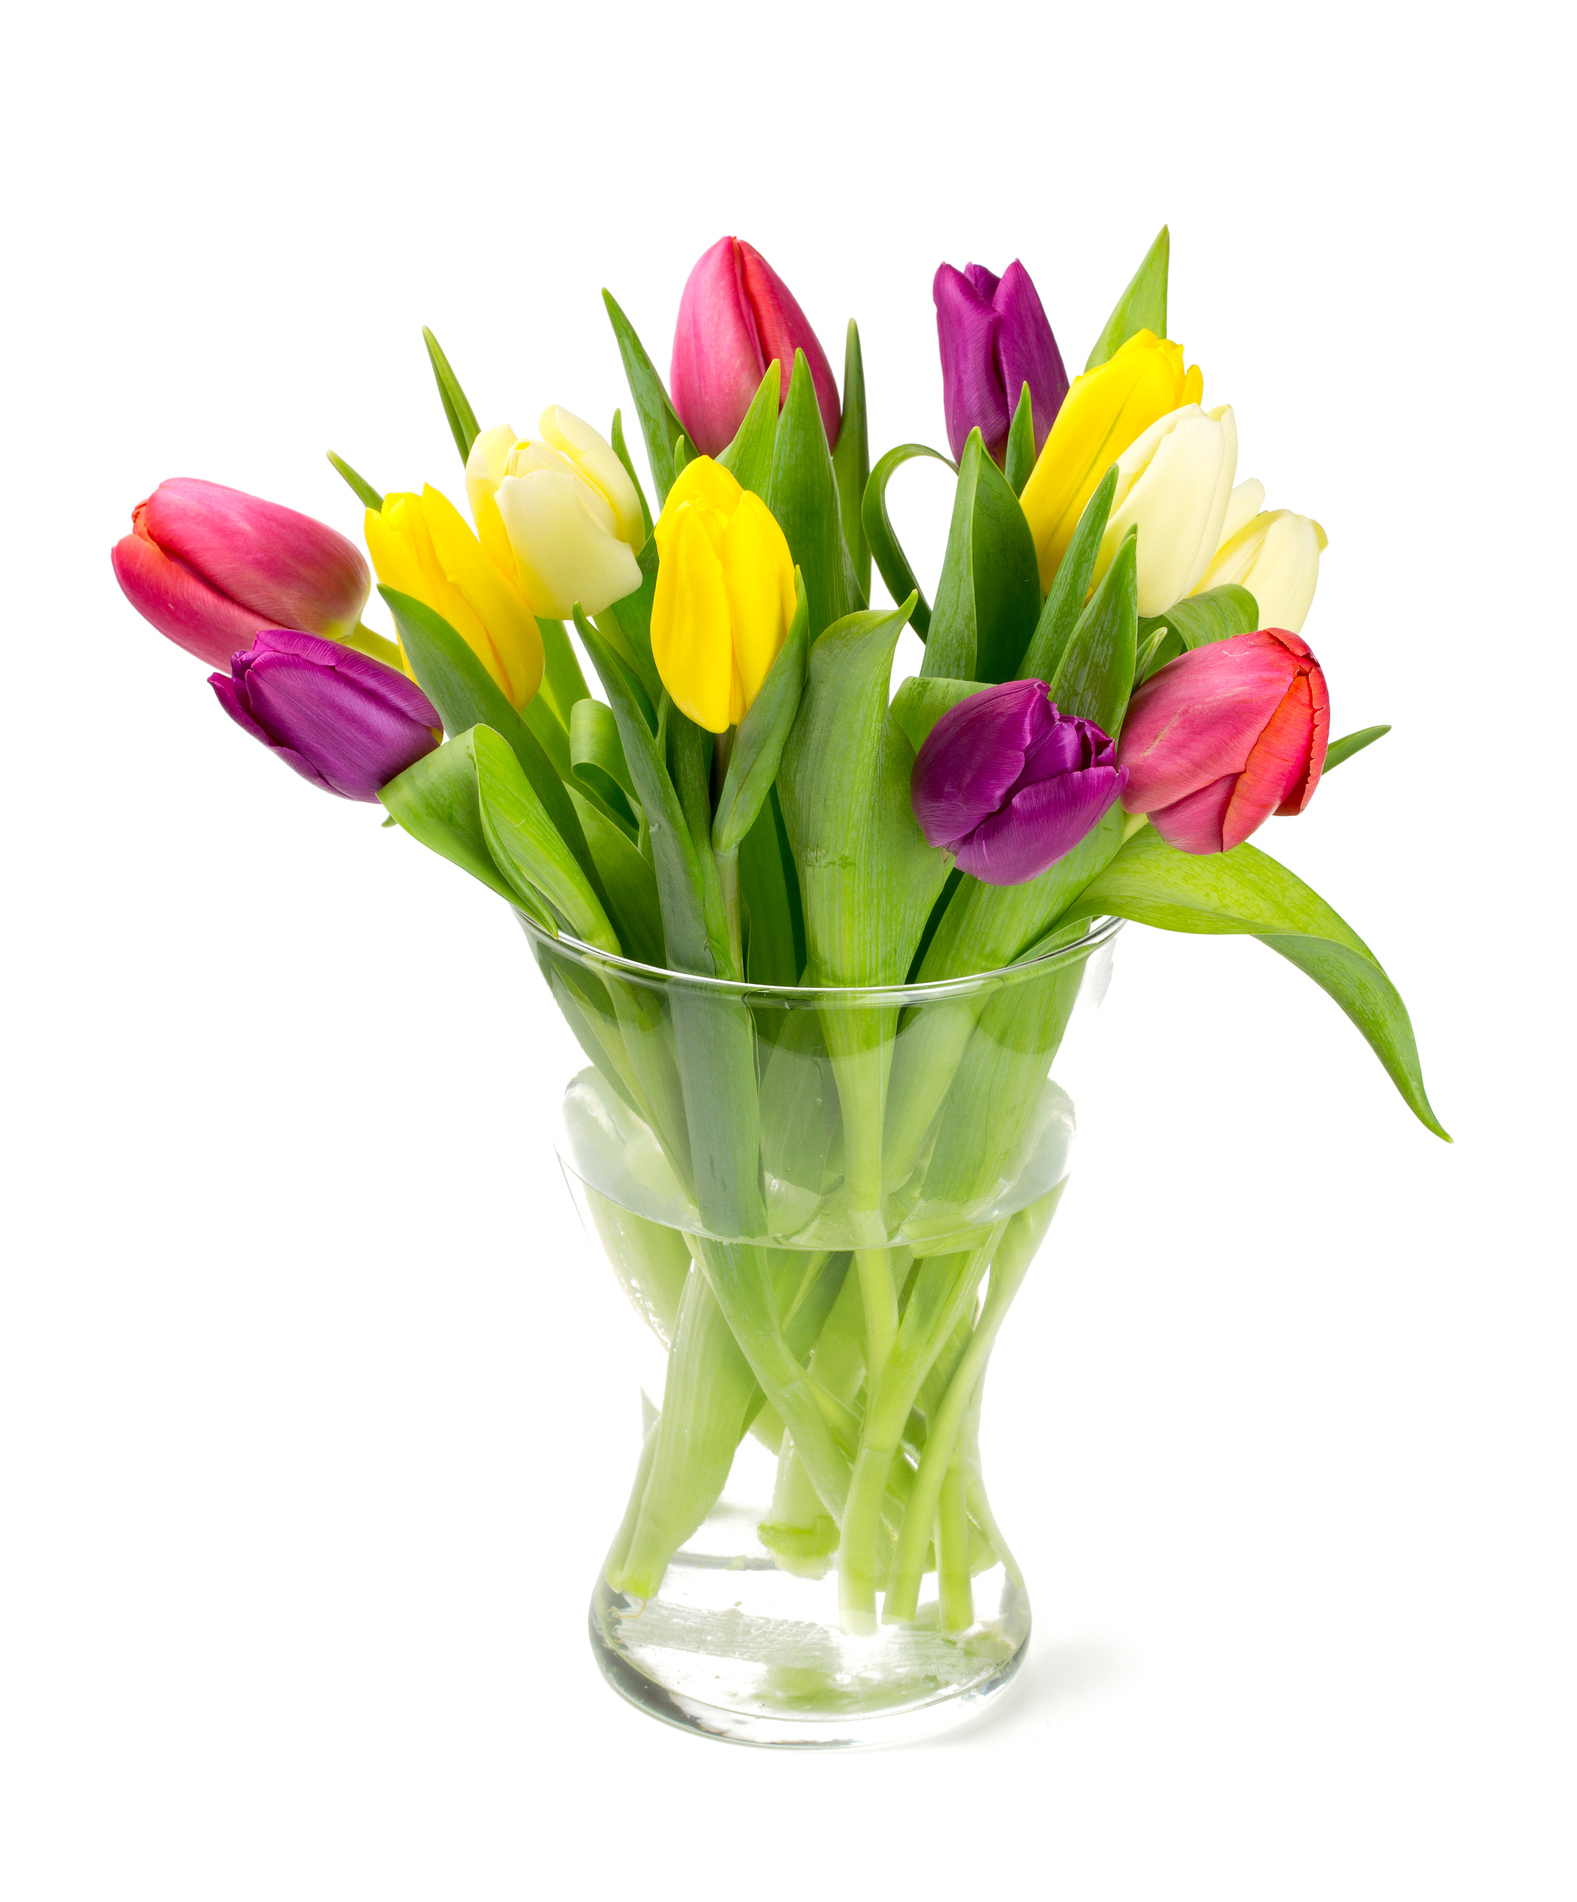 Phinl - We love tulips